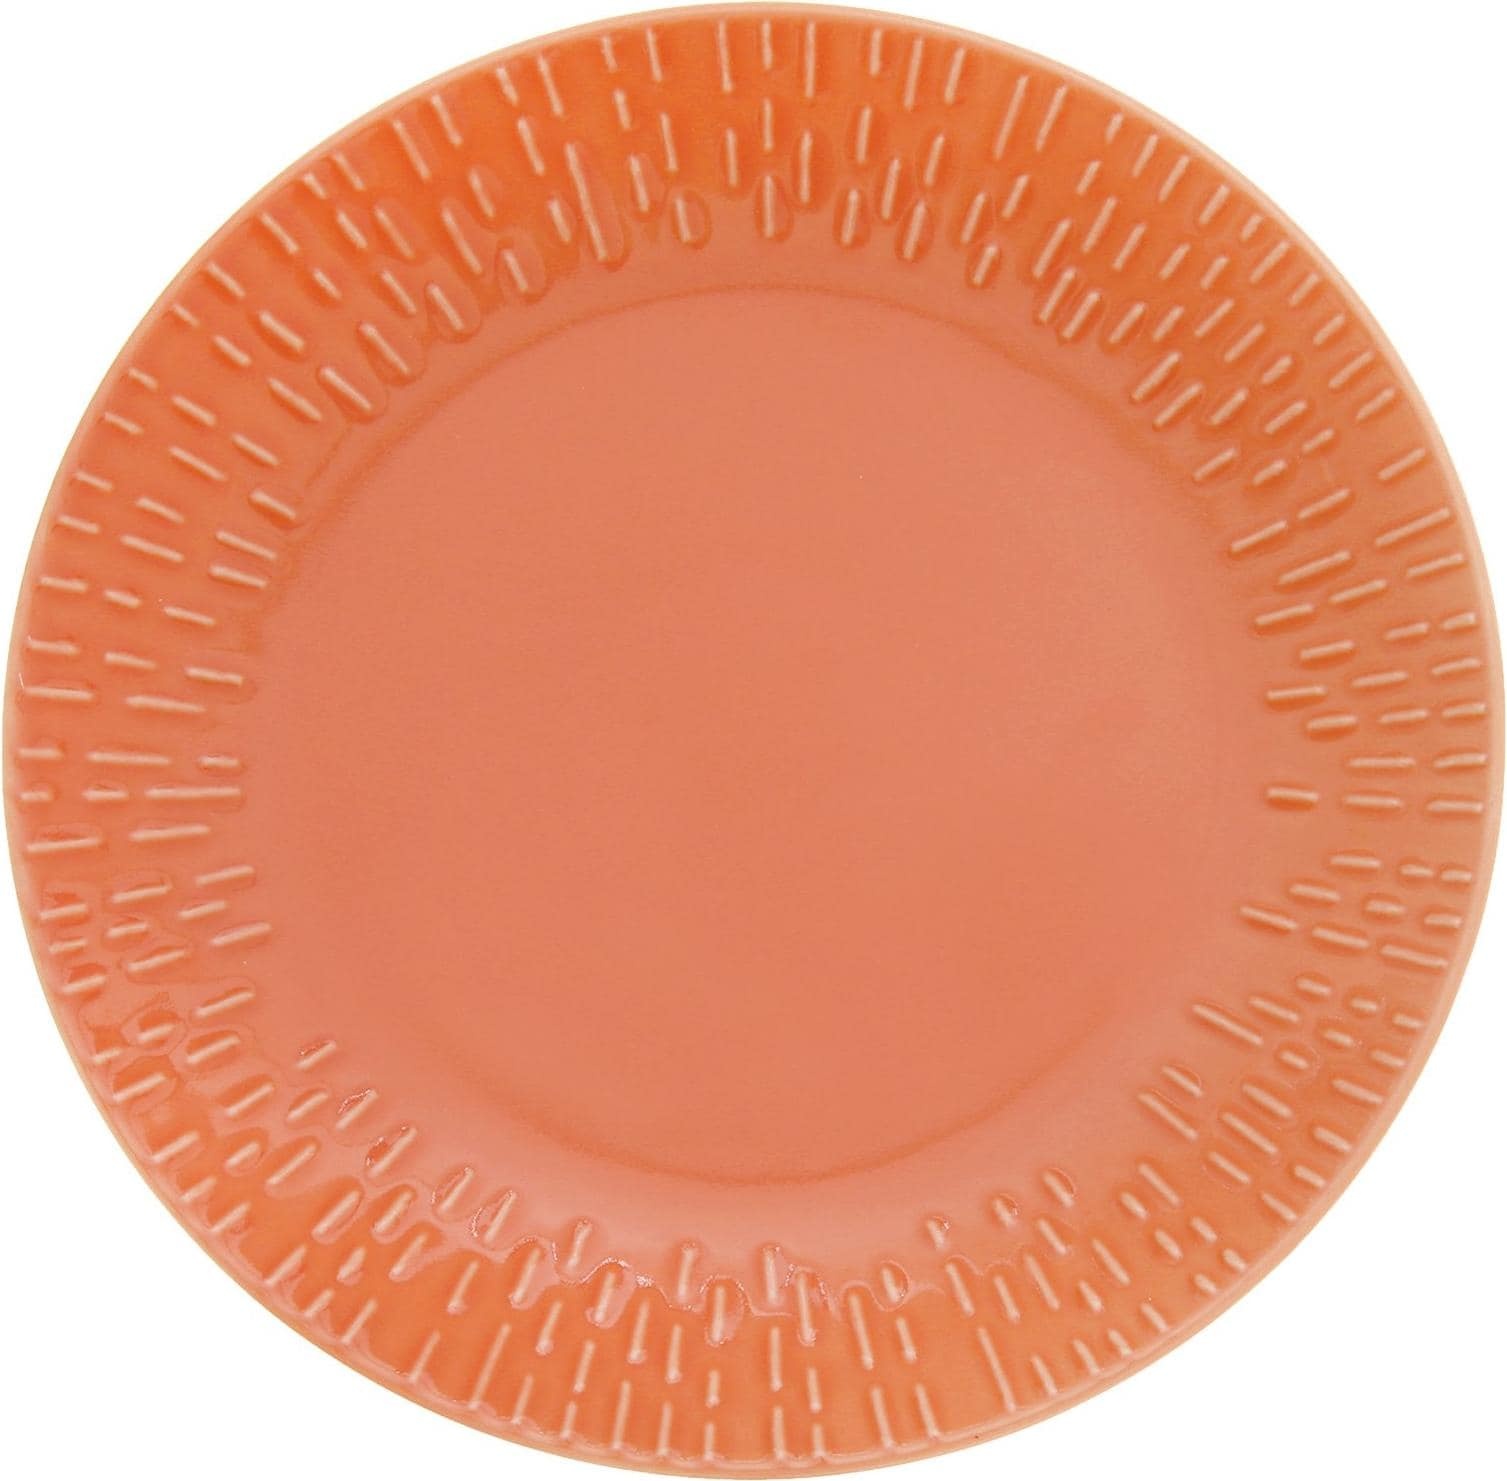 Aida Life in Colour - Confetti - Apricot dessert plate w/relief porcelain (13322), Teller, Orange